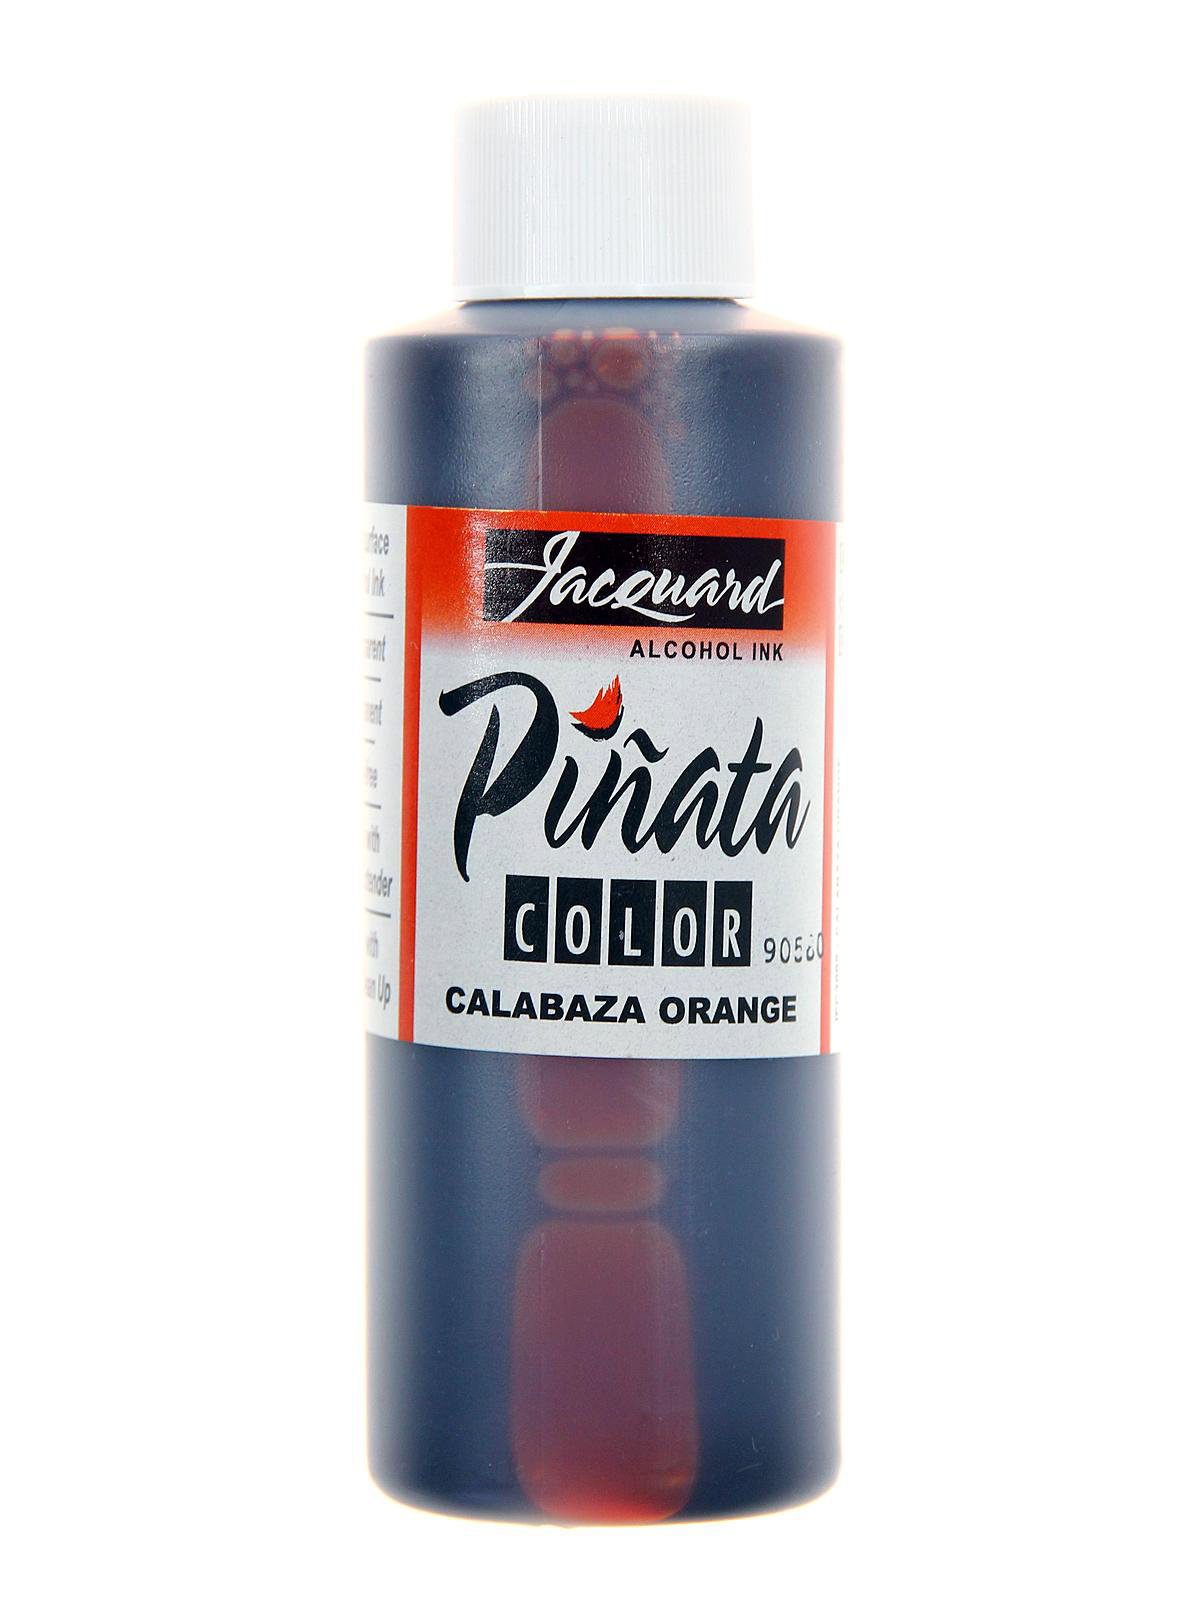 Jacquard Pinata Color Alcohol Ink 4oz Santa Fe Red